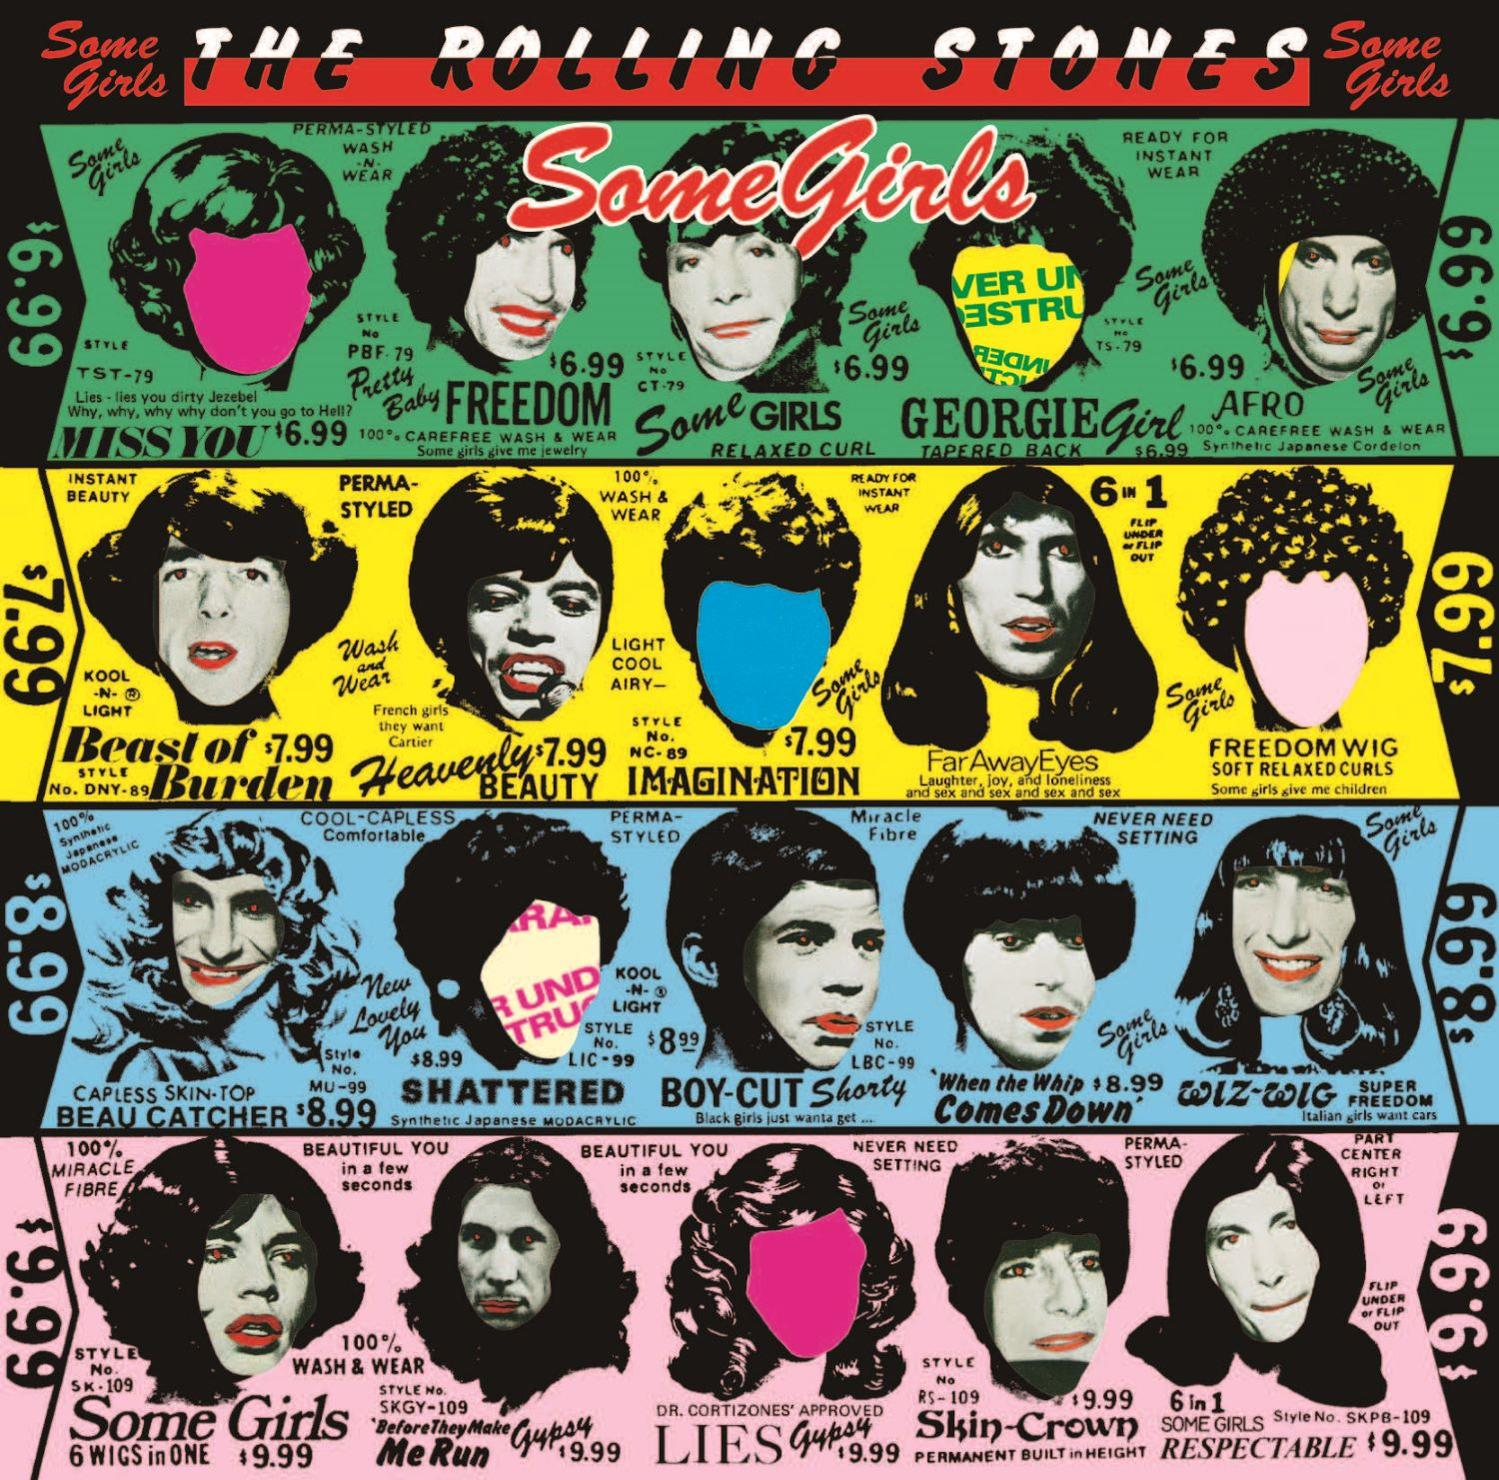 The Rolling Stones - SHM 1CD) - Some (Ltd.Japan Girls (CD)